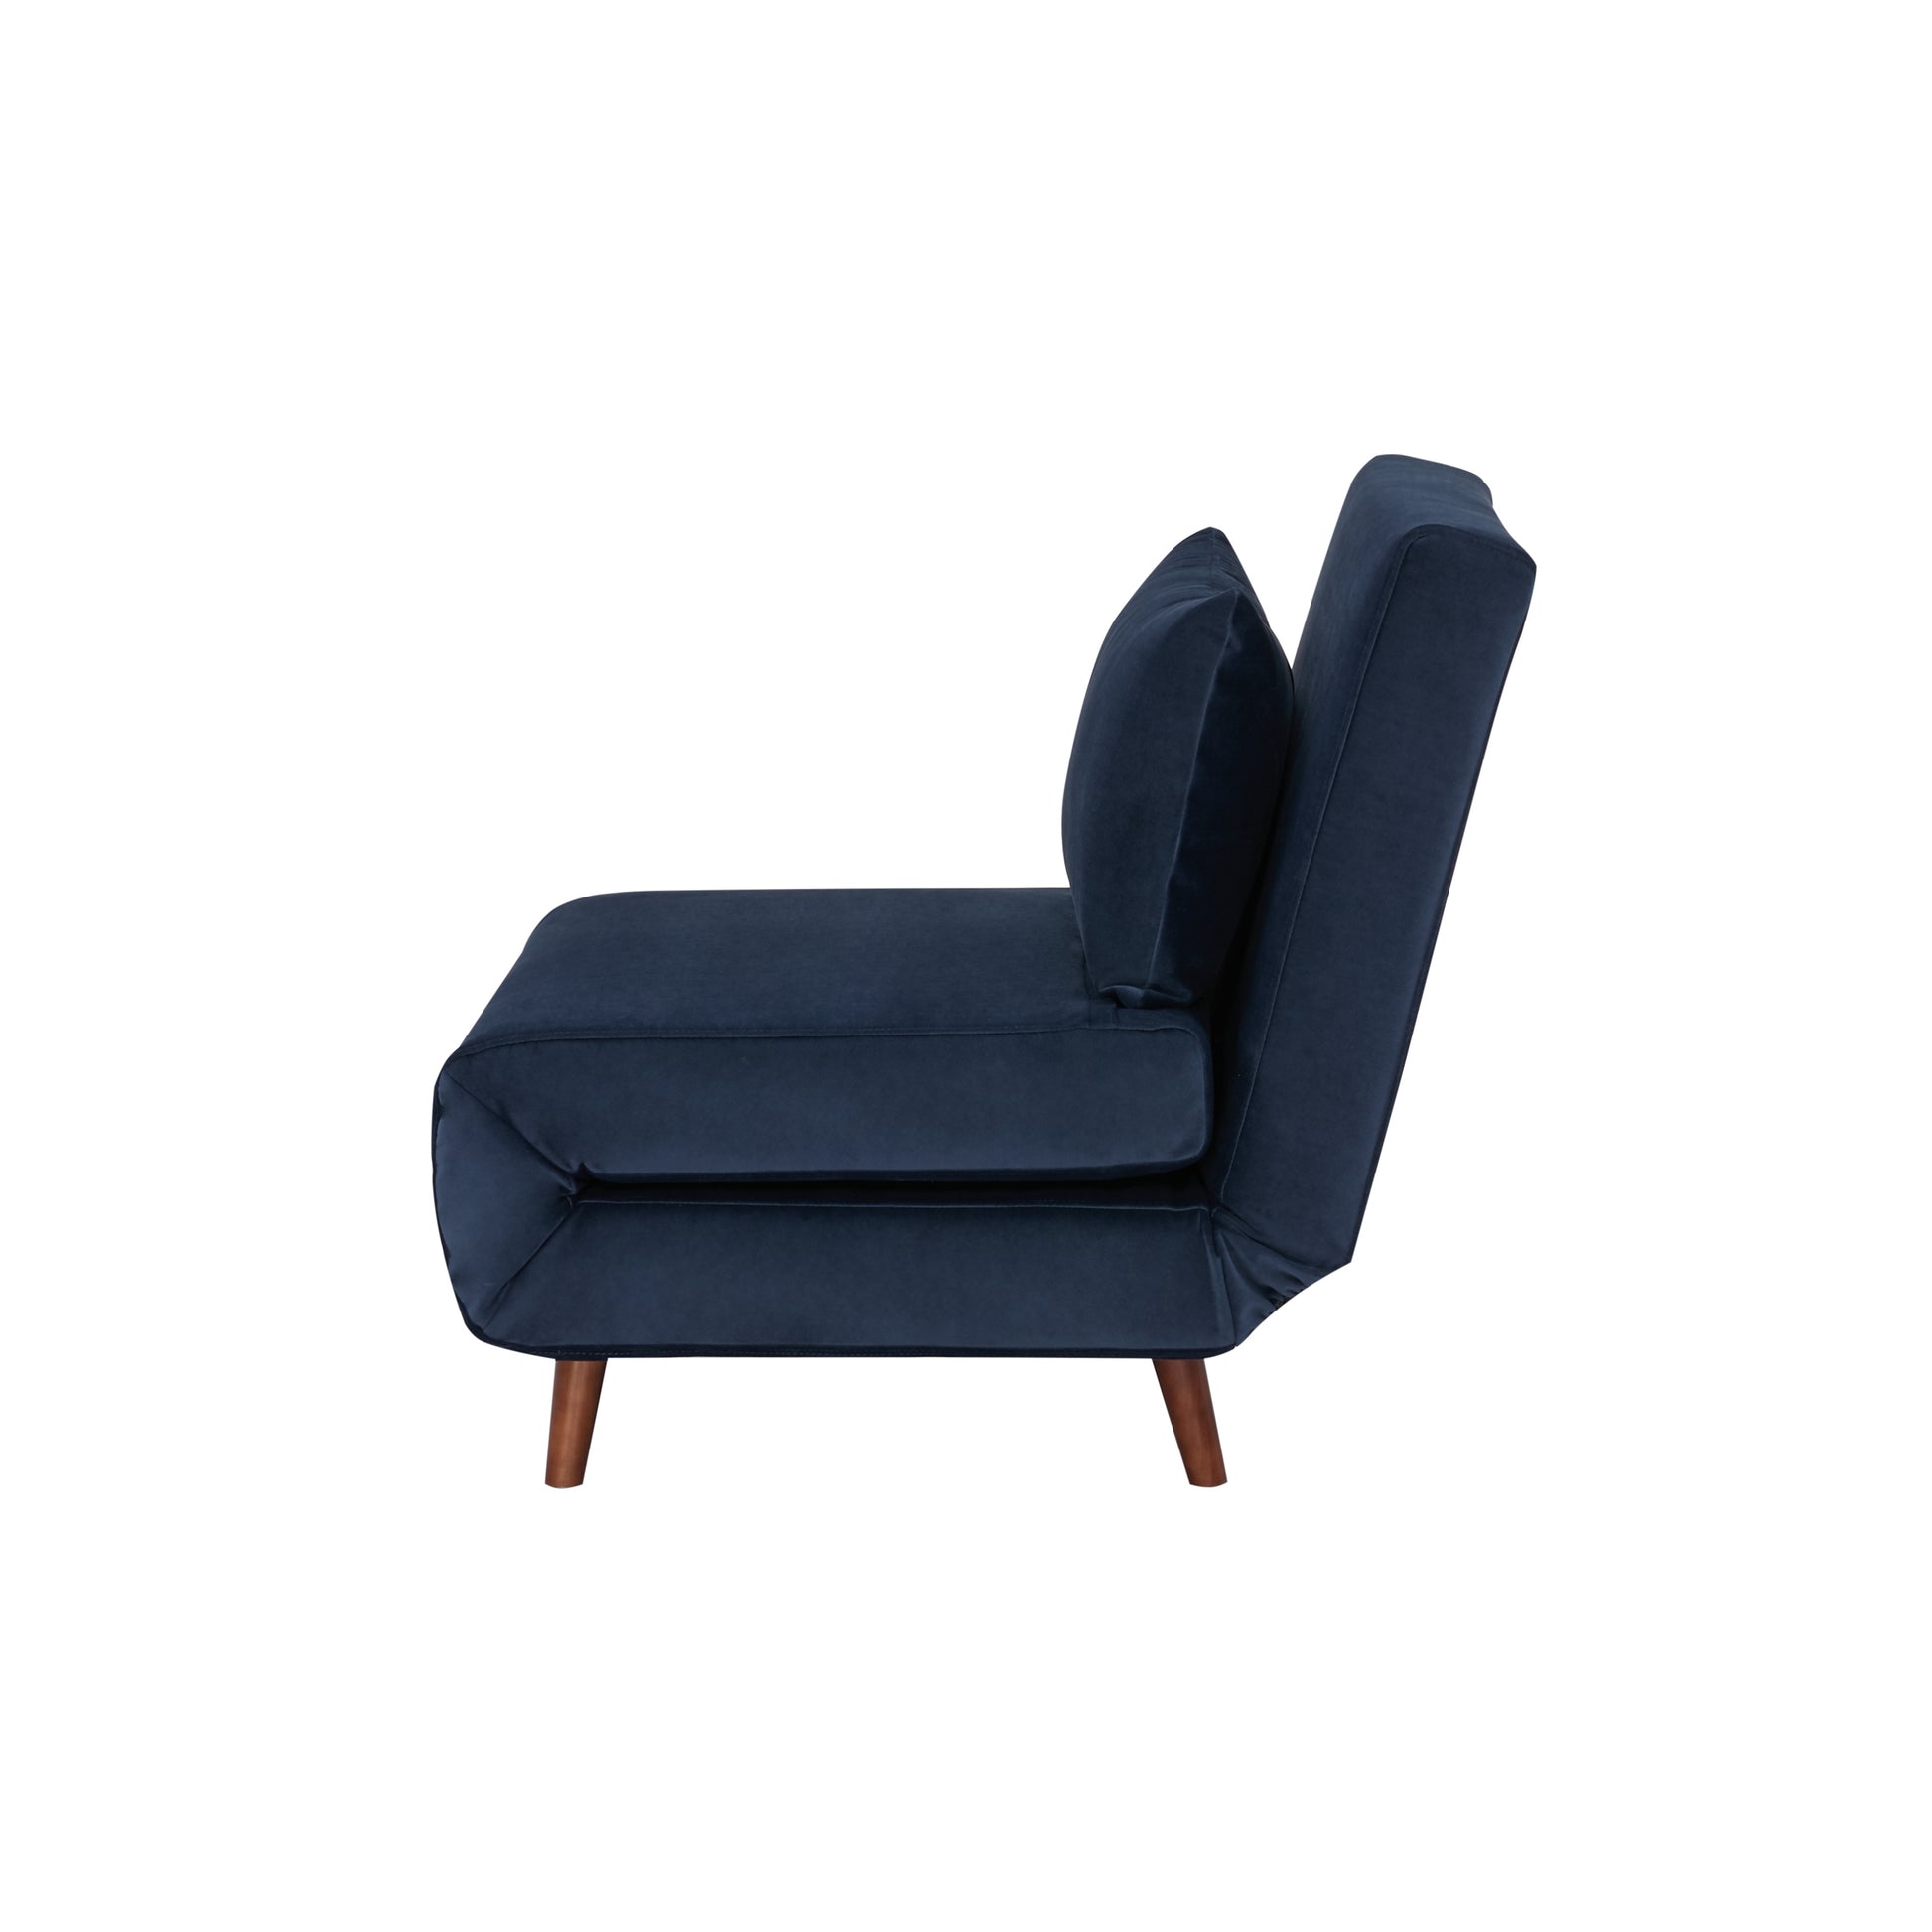 Artdeco Chair – Order Comfortable Tustin Home Convertible and Modern Velvet - Sleeper Now!